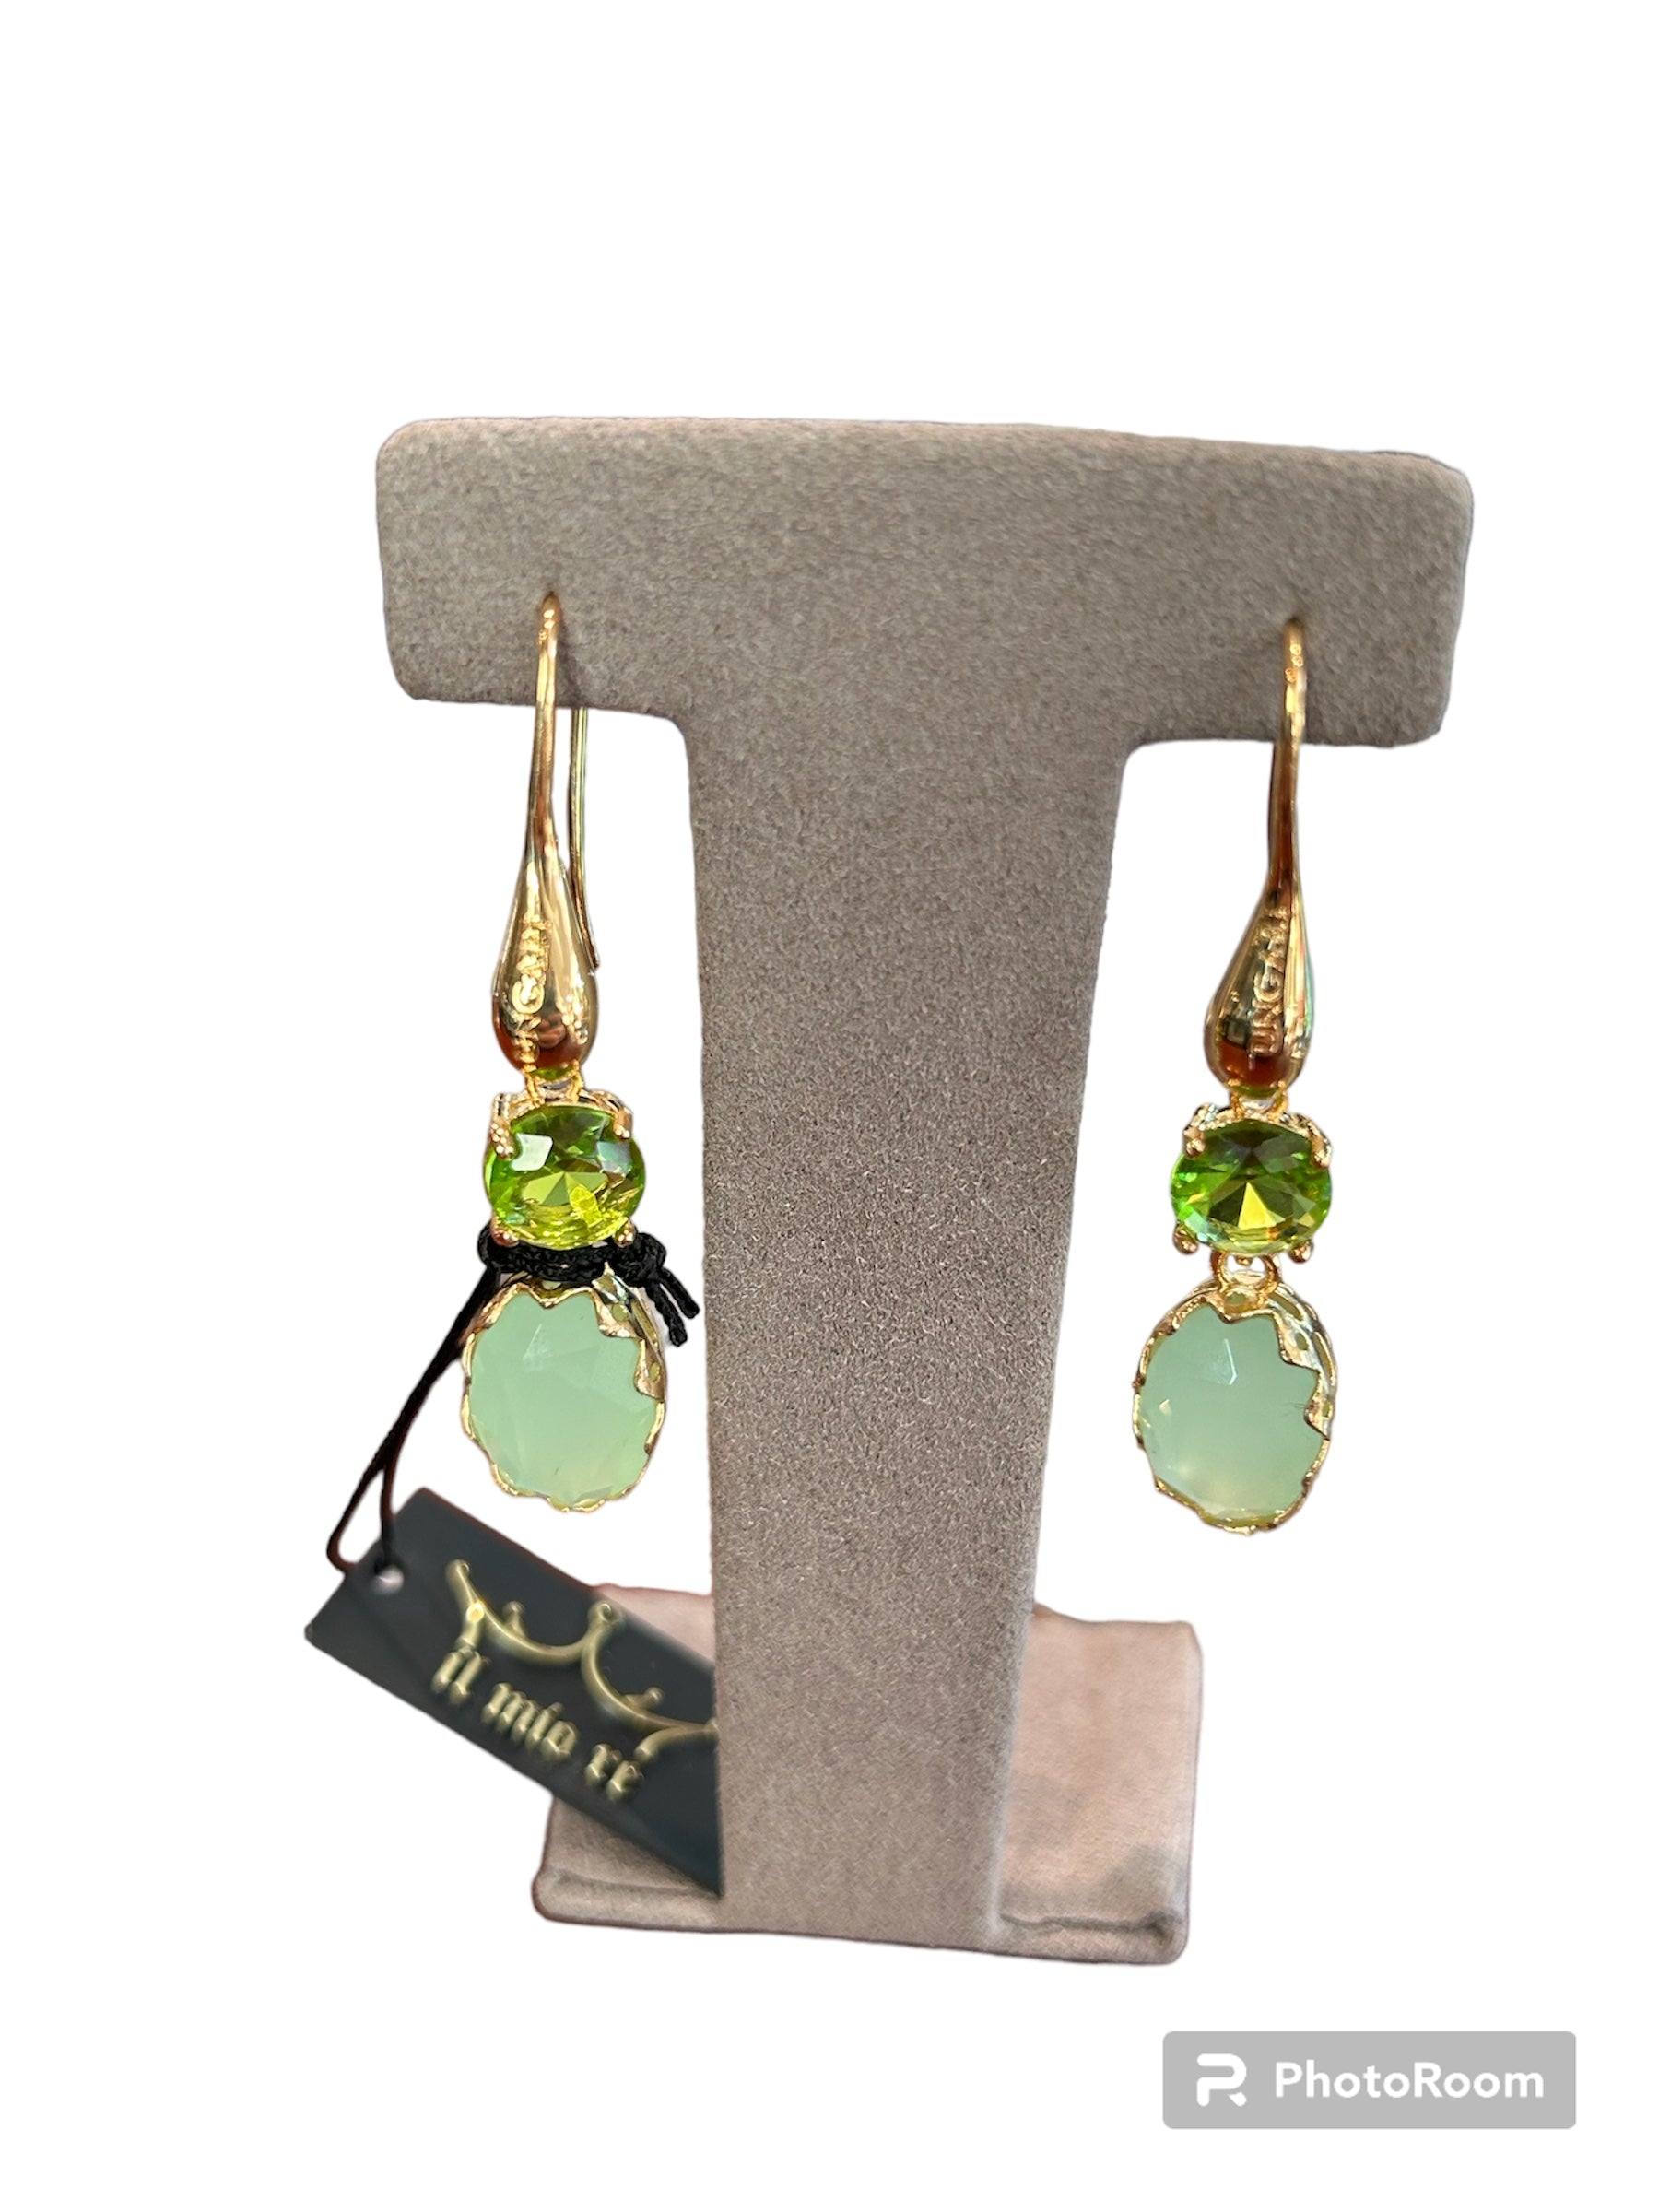 IL Mio Re - Gilt bronze pendant earrings with green stones - ILMIORE OR 045